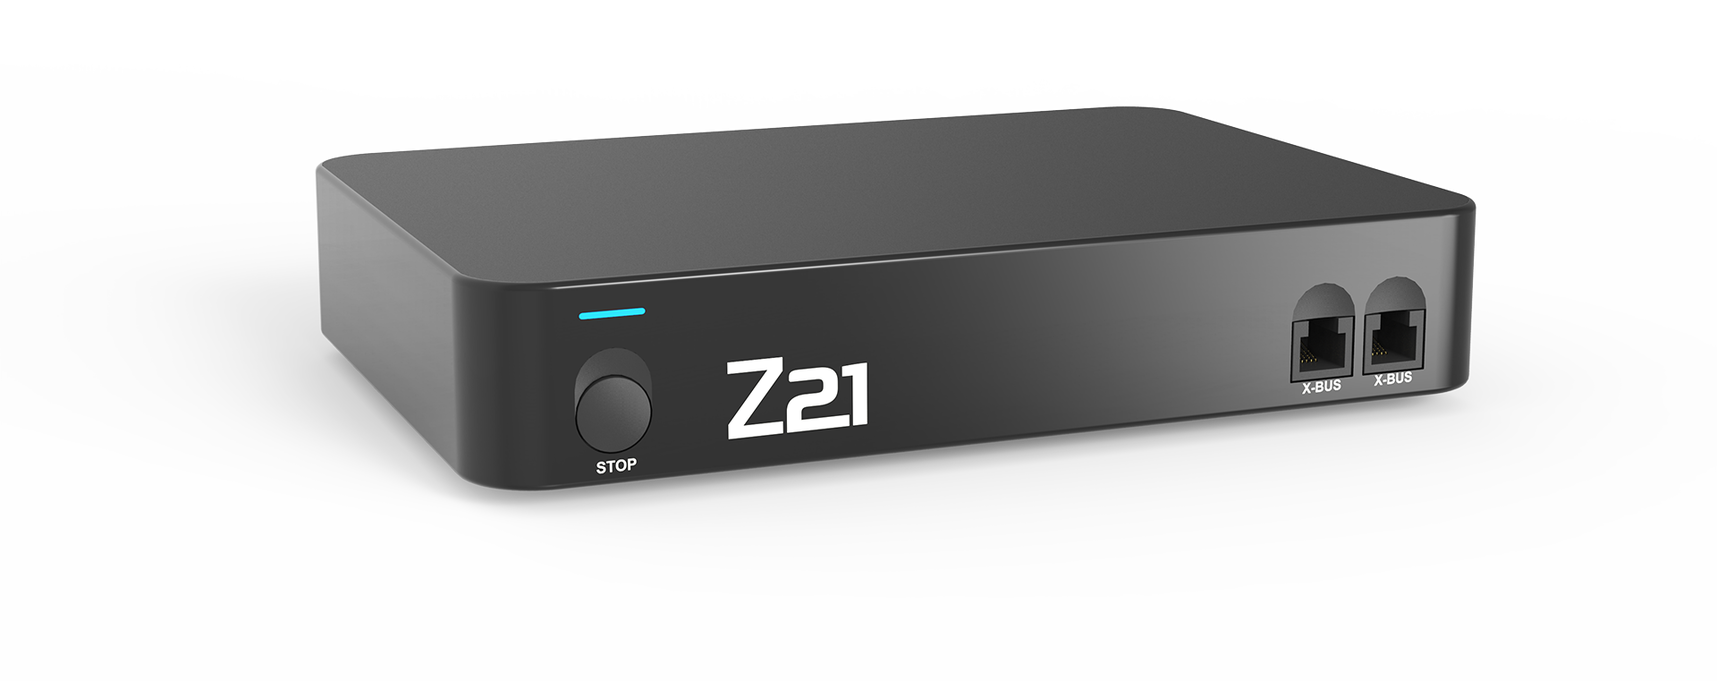 Z21 Roco 10820 - Digital control centre Z21